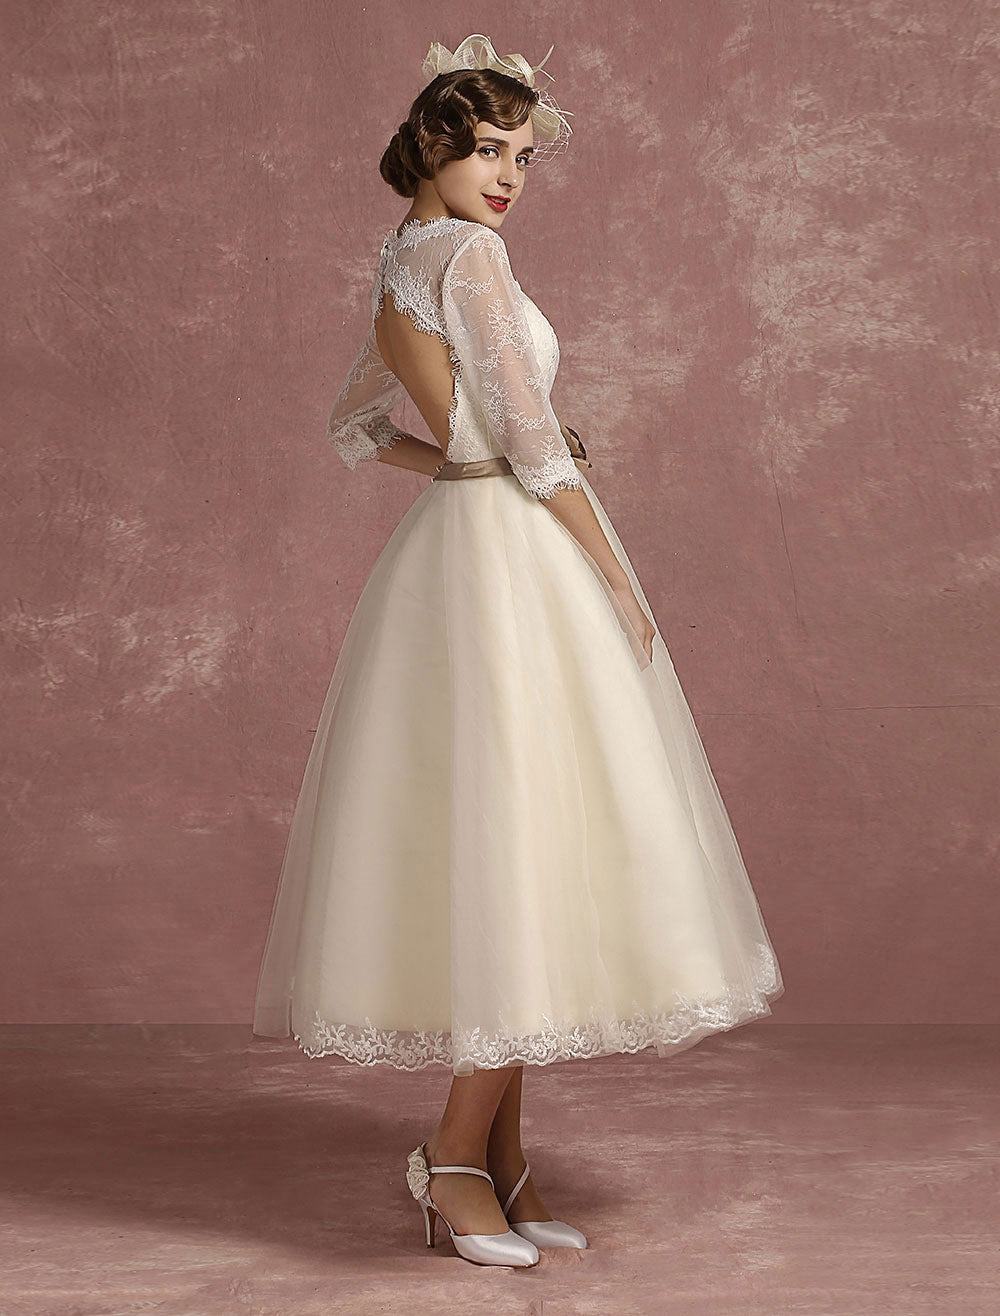 Vintage Polka Dot Tulle Floral Lace Wedding Dress Short Flare Sleeves  Keyhole Back Sash A Line Boho Modest Romantic Bridal Gown - Wedding Dresses  - AliExpress